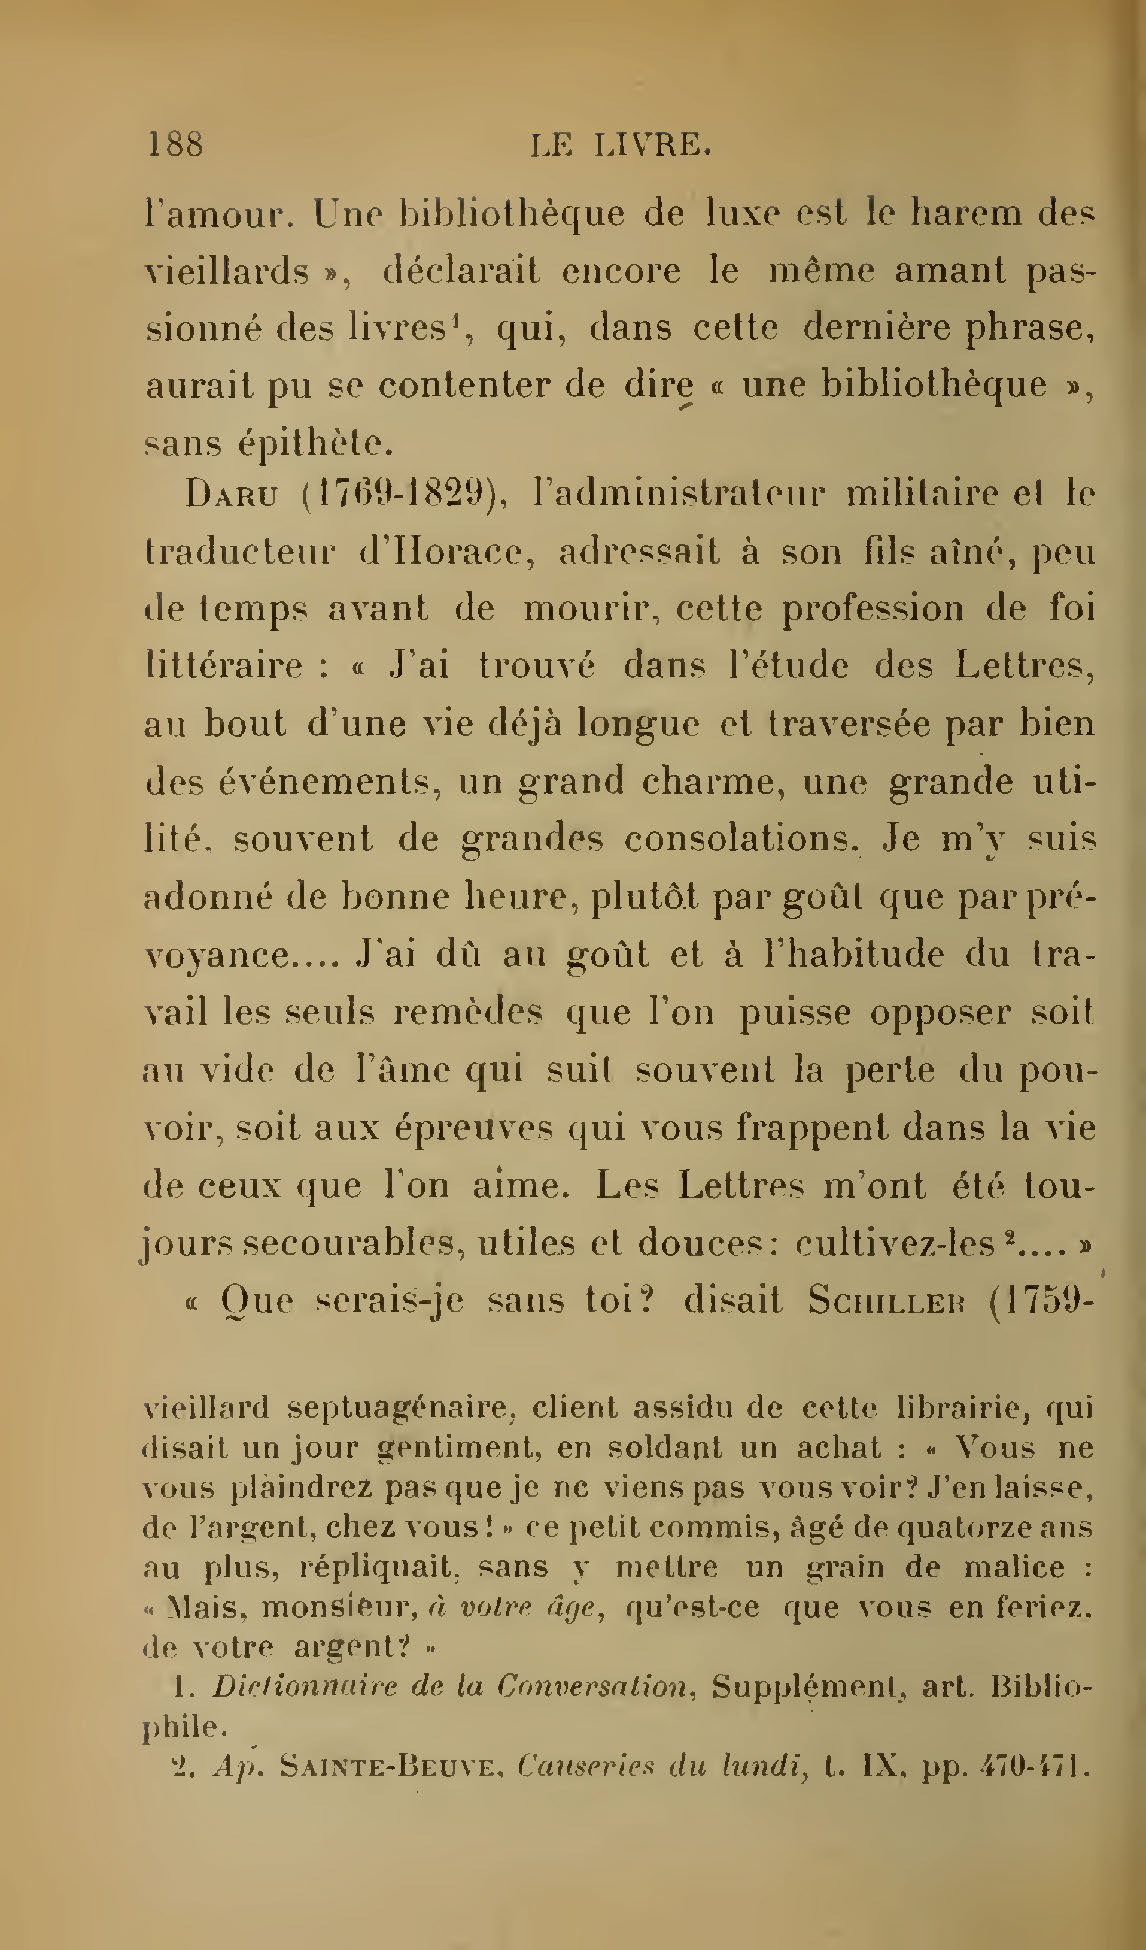 Albert Cim, Le Livre, t. I, p. 188.